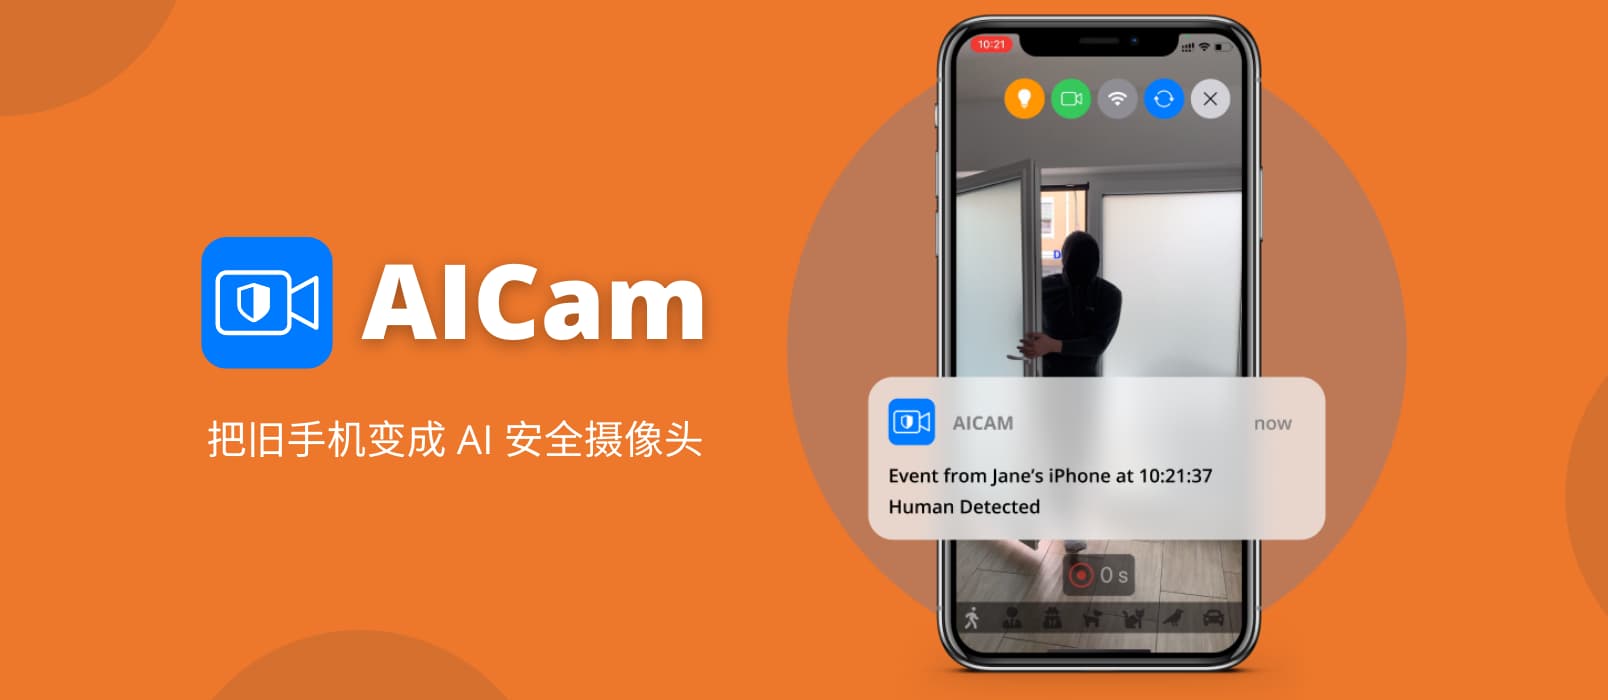 AiCam - AI 智能监控，用旧 iPhone 实现人脸检测、宠物识别（猫、狗、鸟）、车辆识别